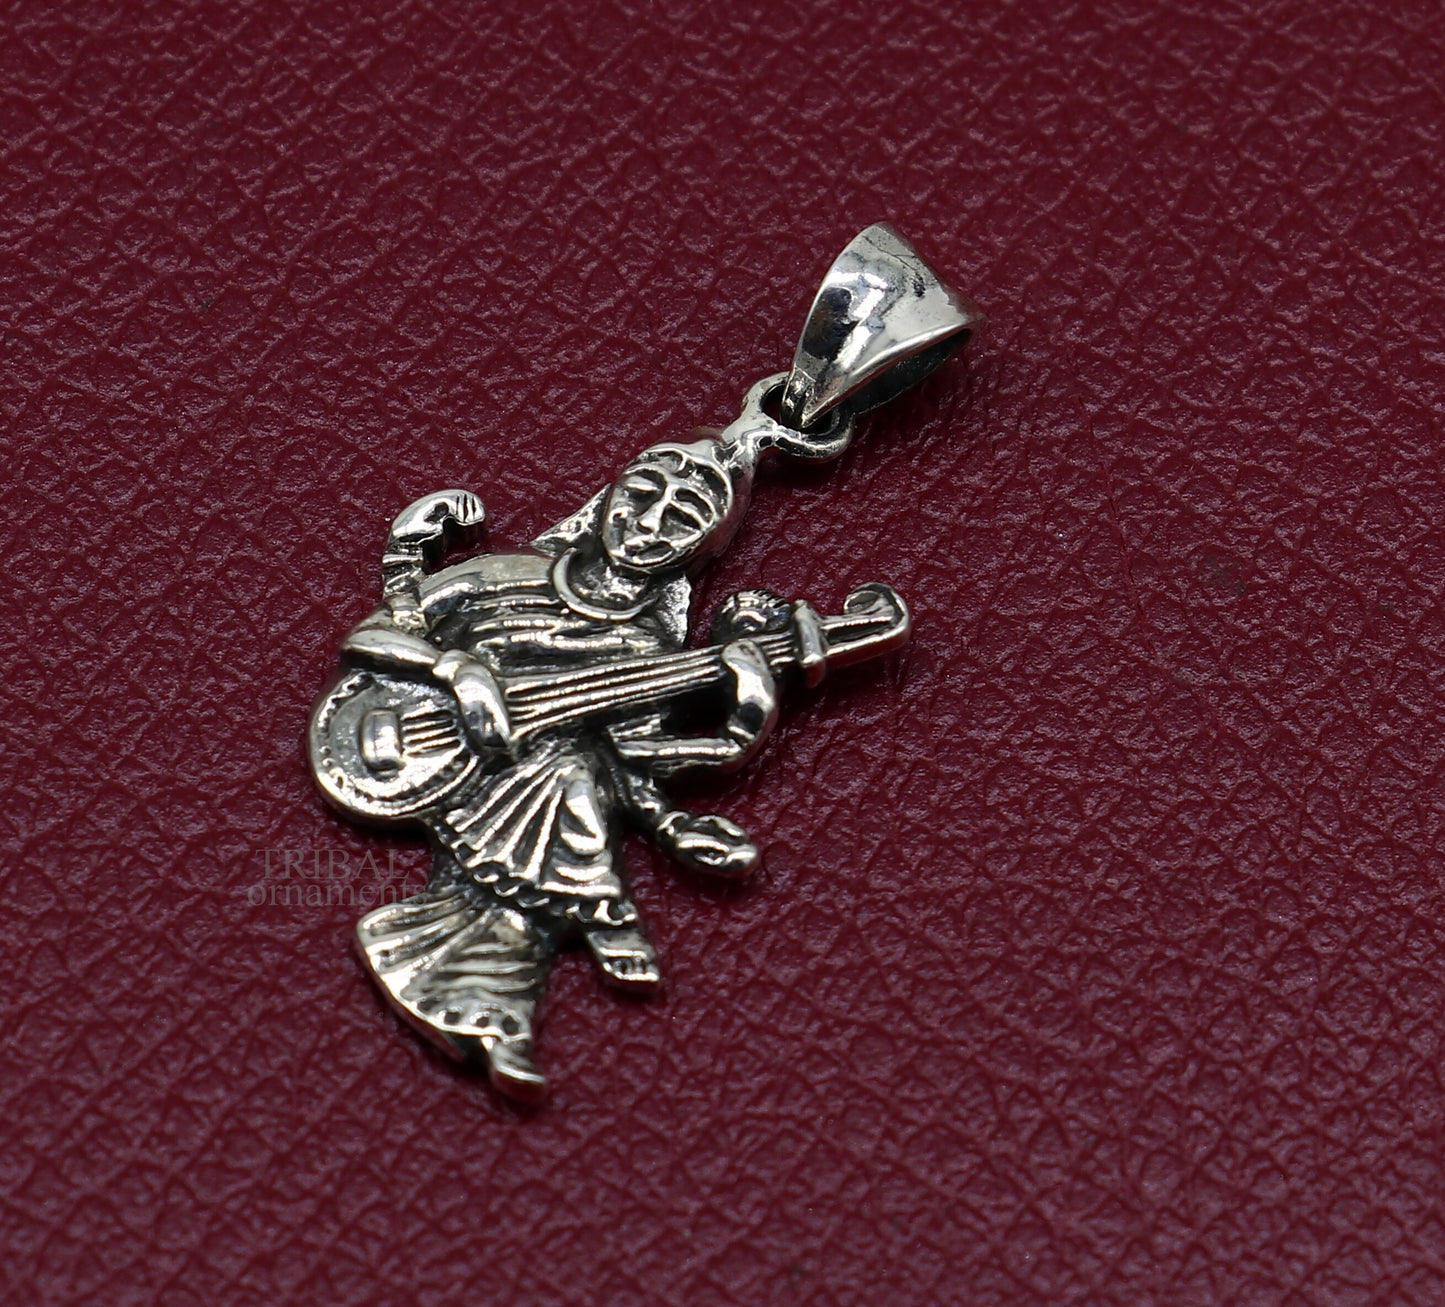 925 sterling silver unique design Goddess Saraswati/Sharda mataji pendant, goddess pendant good luck divine jewelry tribal jewelry ssp1743 - TRIBAL ORNAMENTS